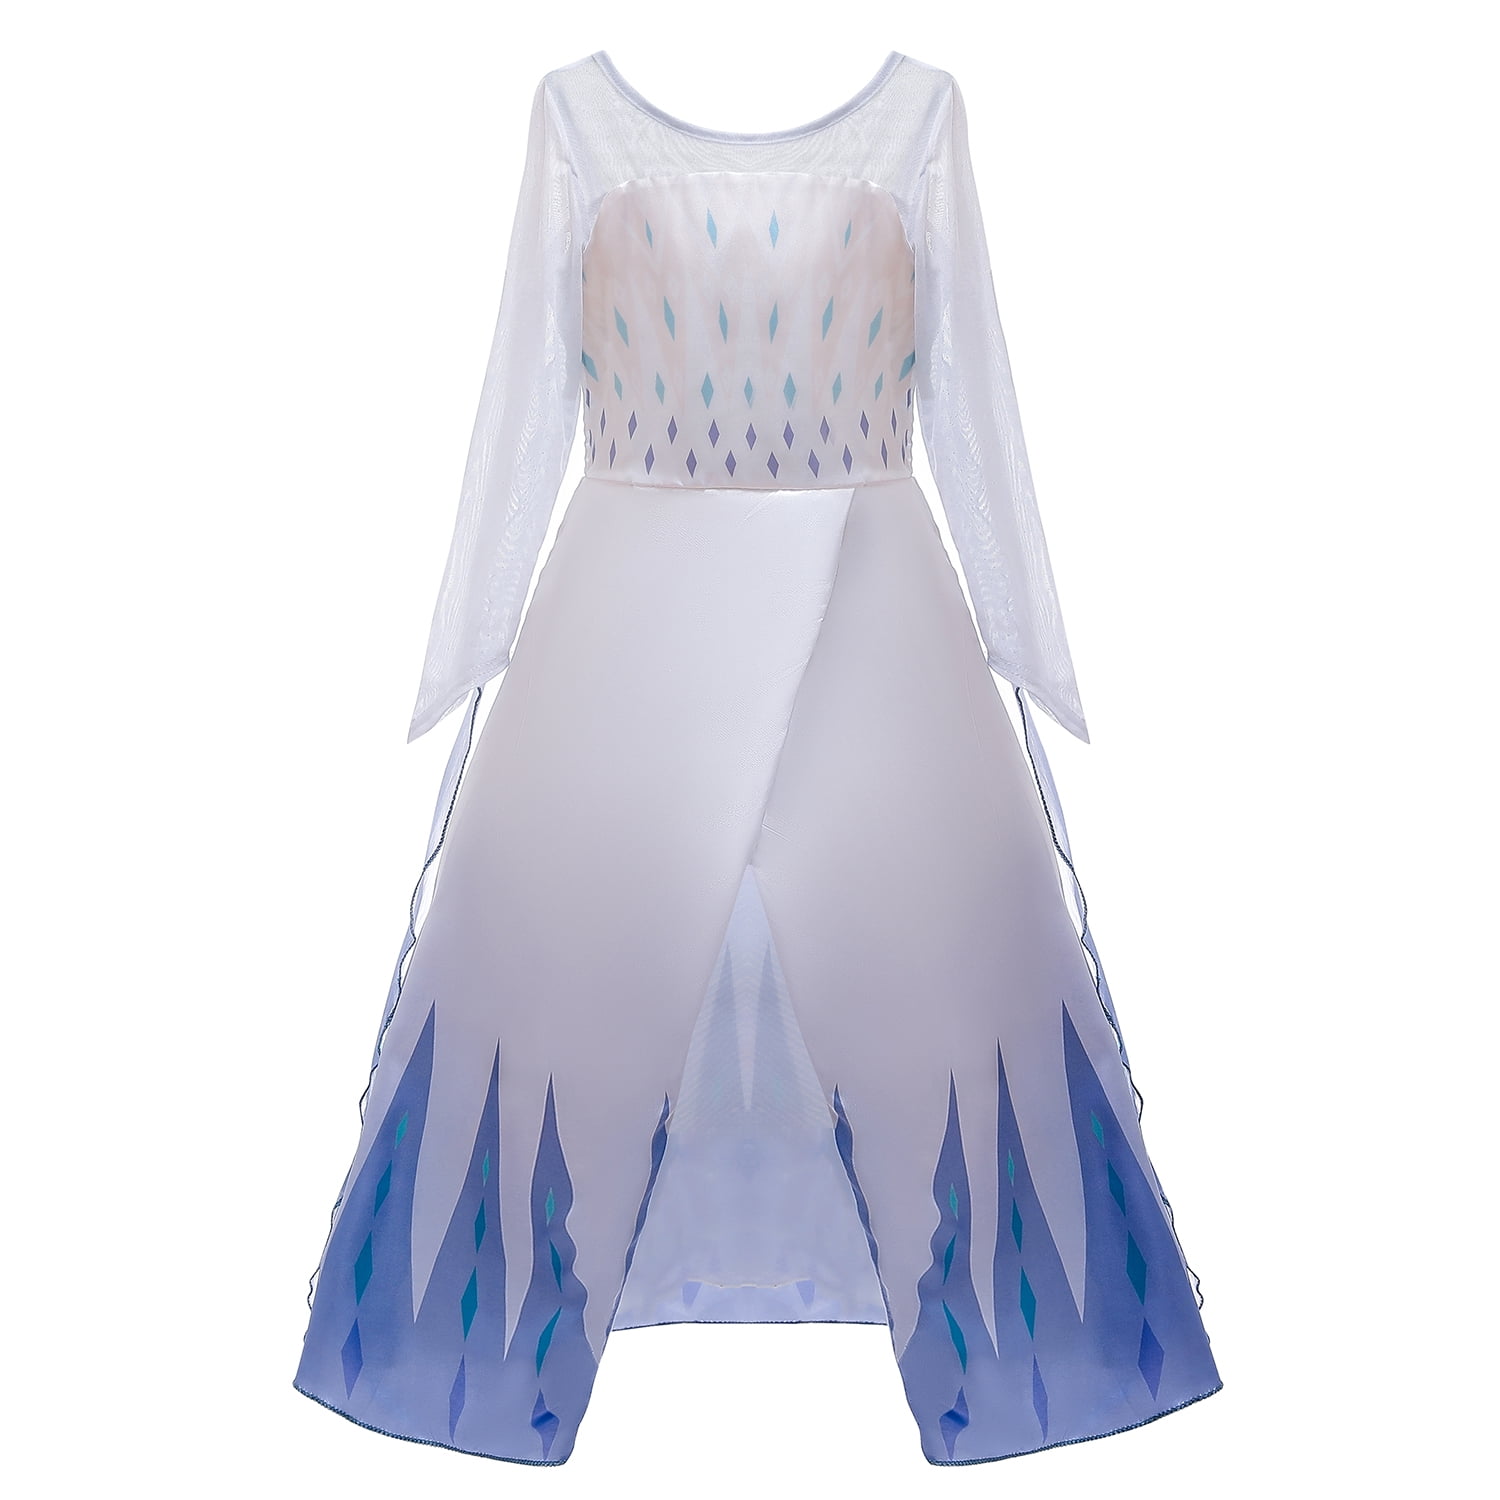 Elsa Dress Girls Fancy Dress Cosplay Kids Frozen 2 Costume Party Outfit NEW  | eBay